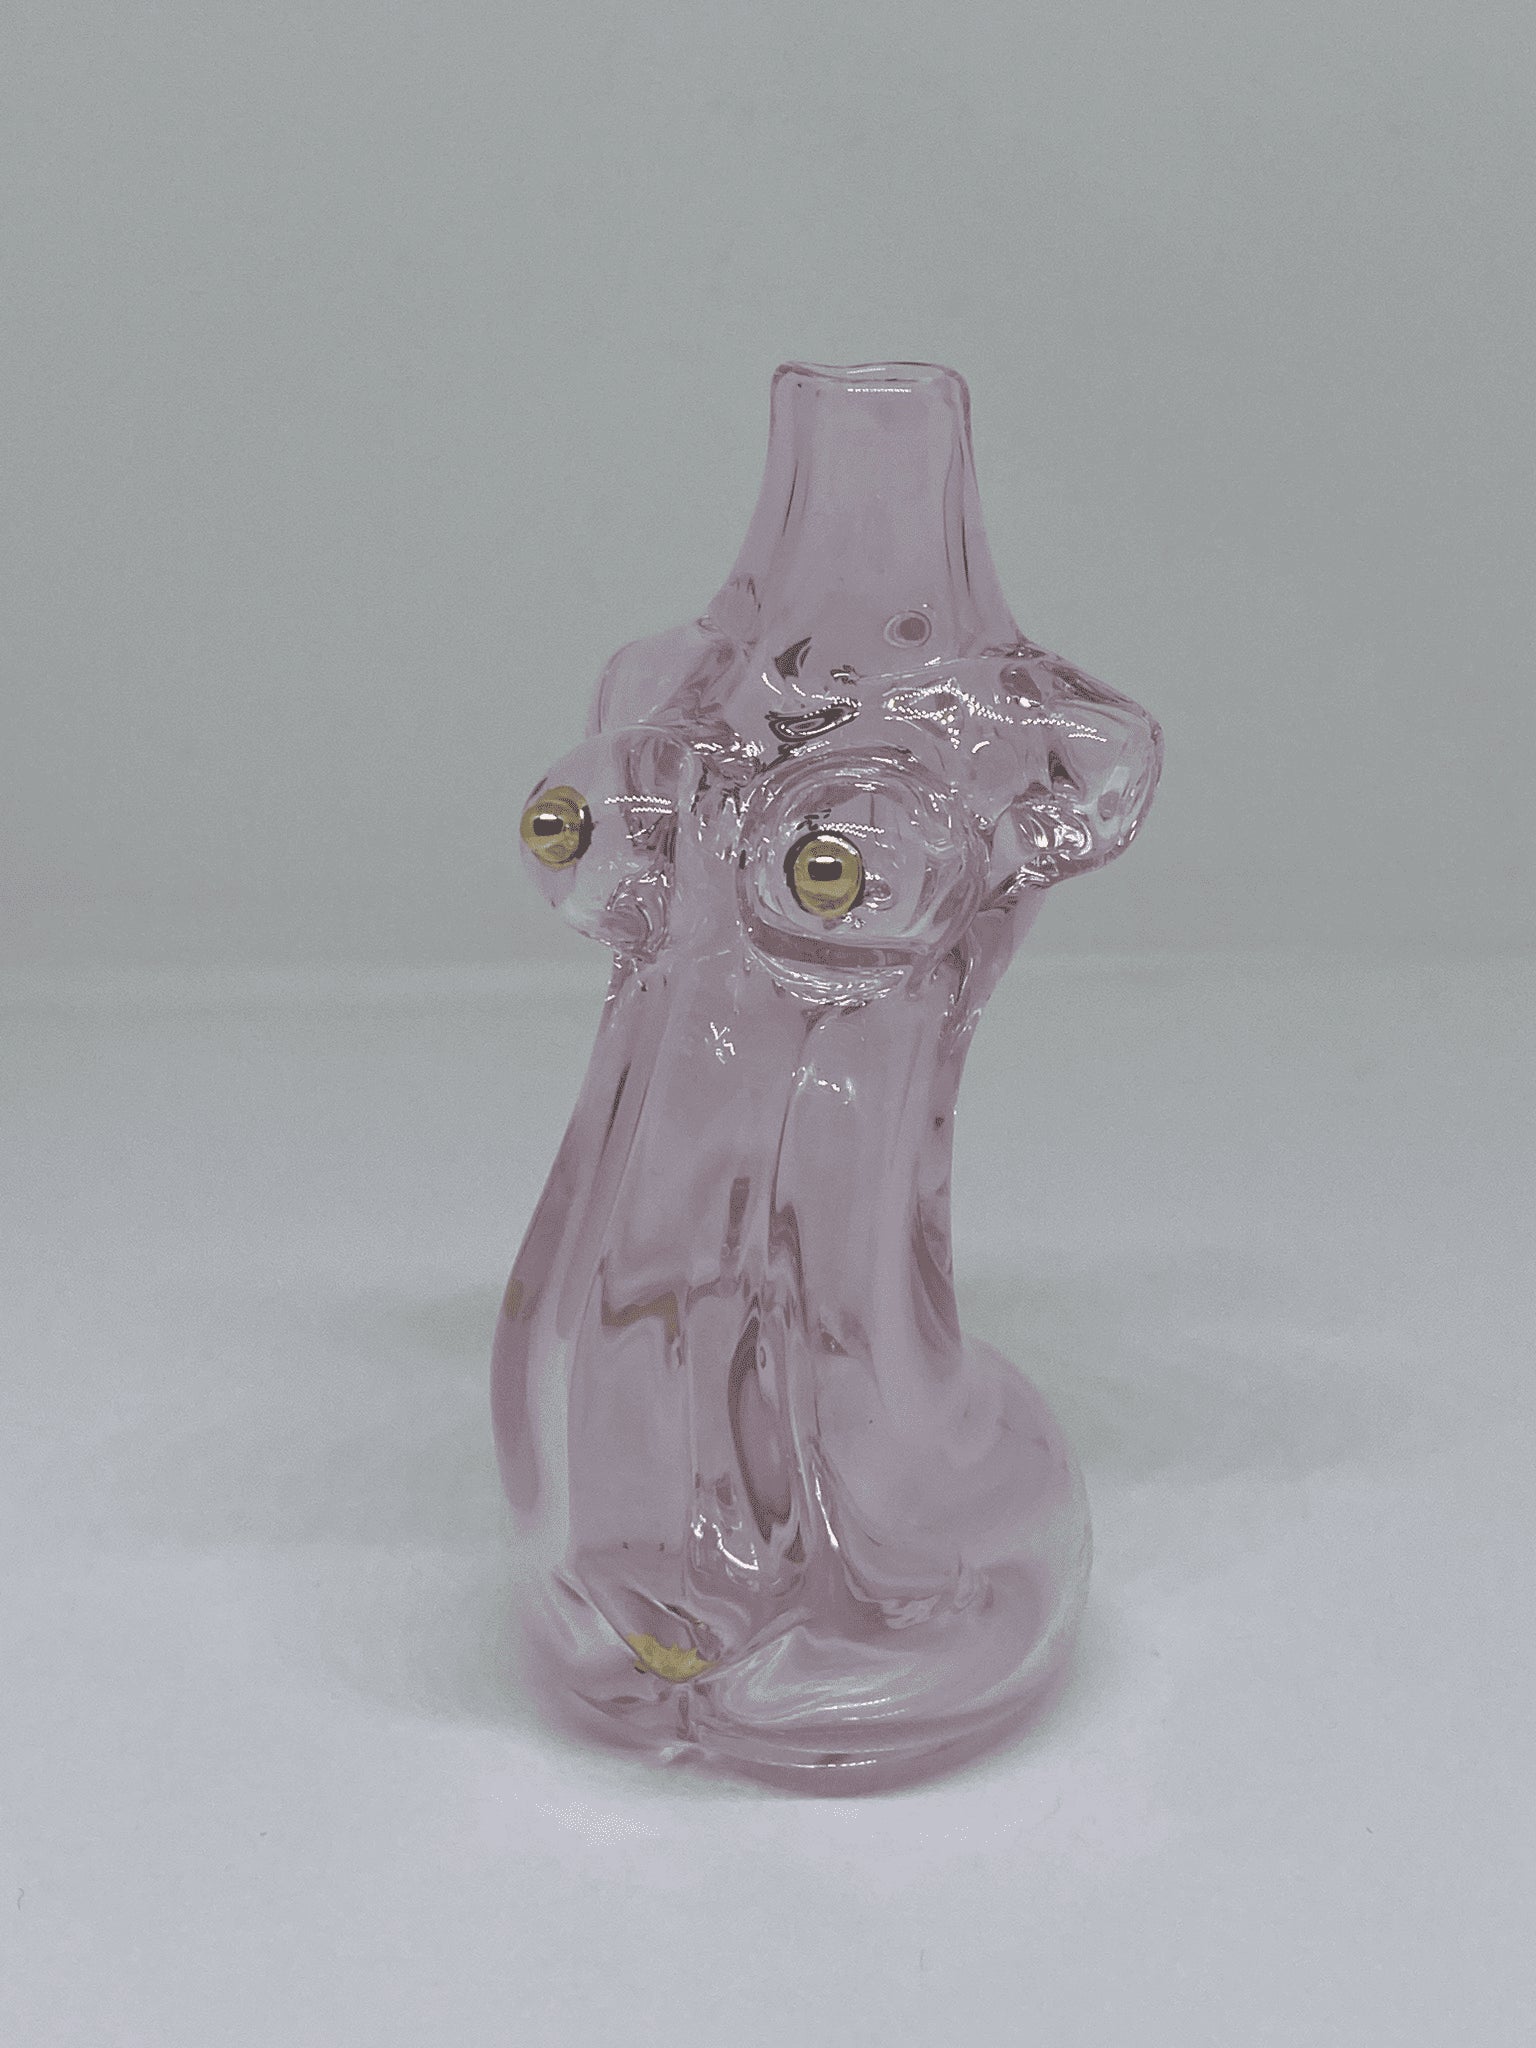 exquisite glass pendant - Pink Torso Onie Pendant by Sibelley